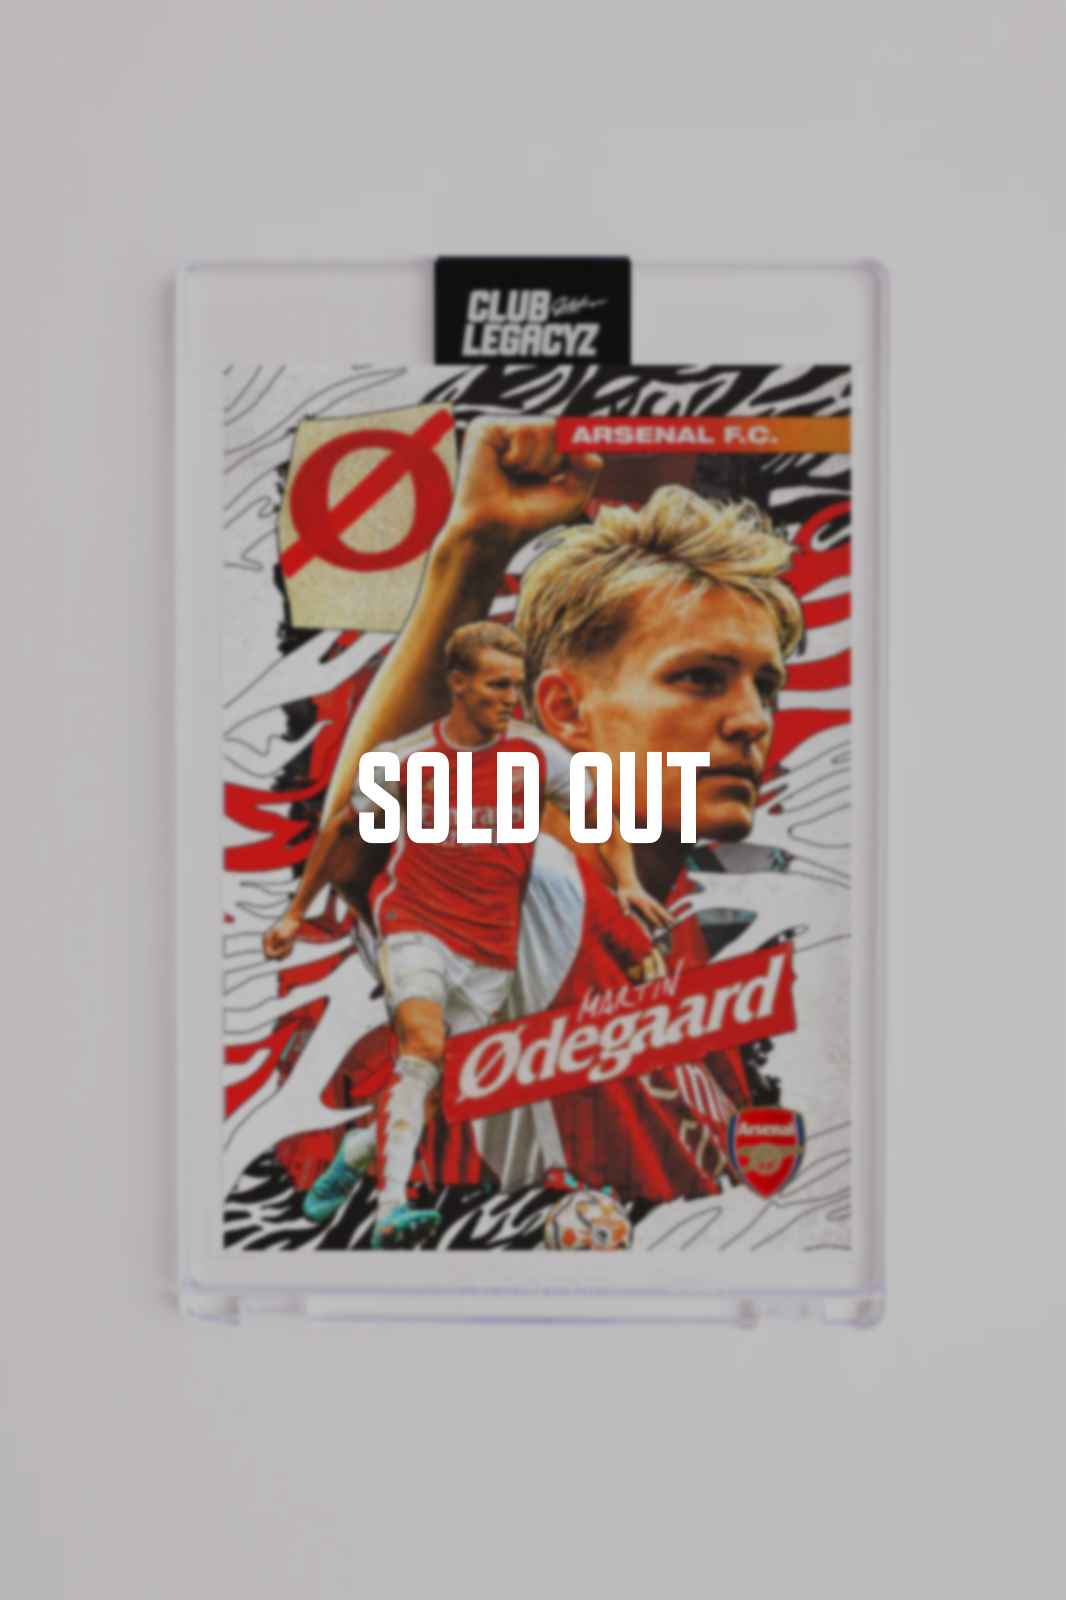 Arsenal FC - Icon Martin Ødegaard 50 exemplaires